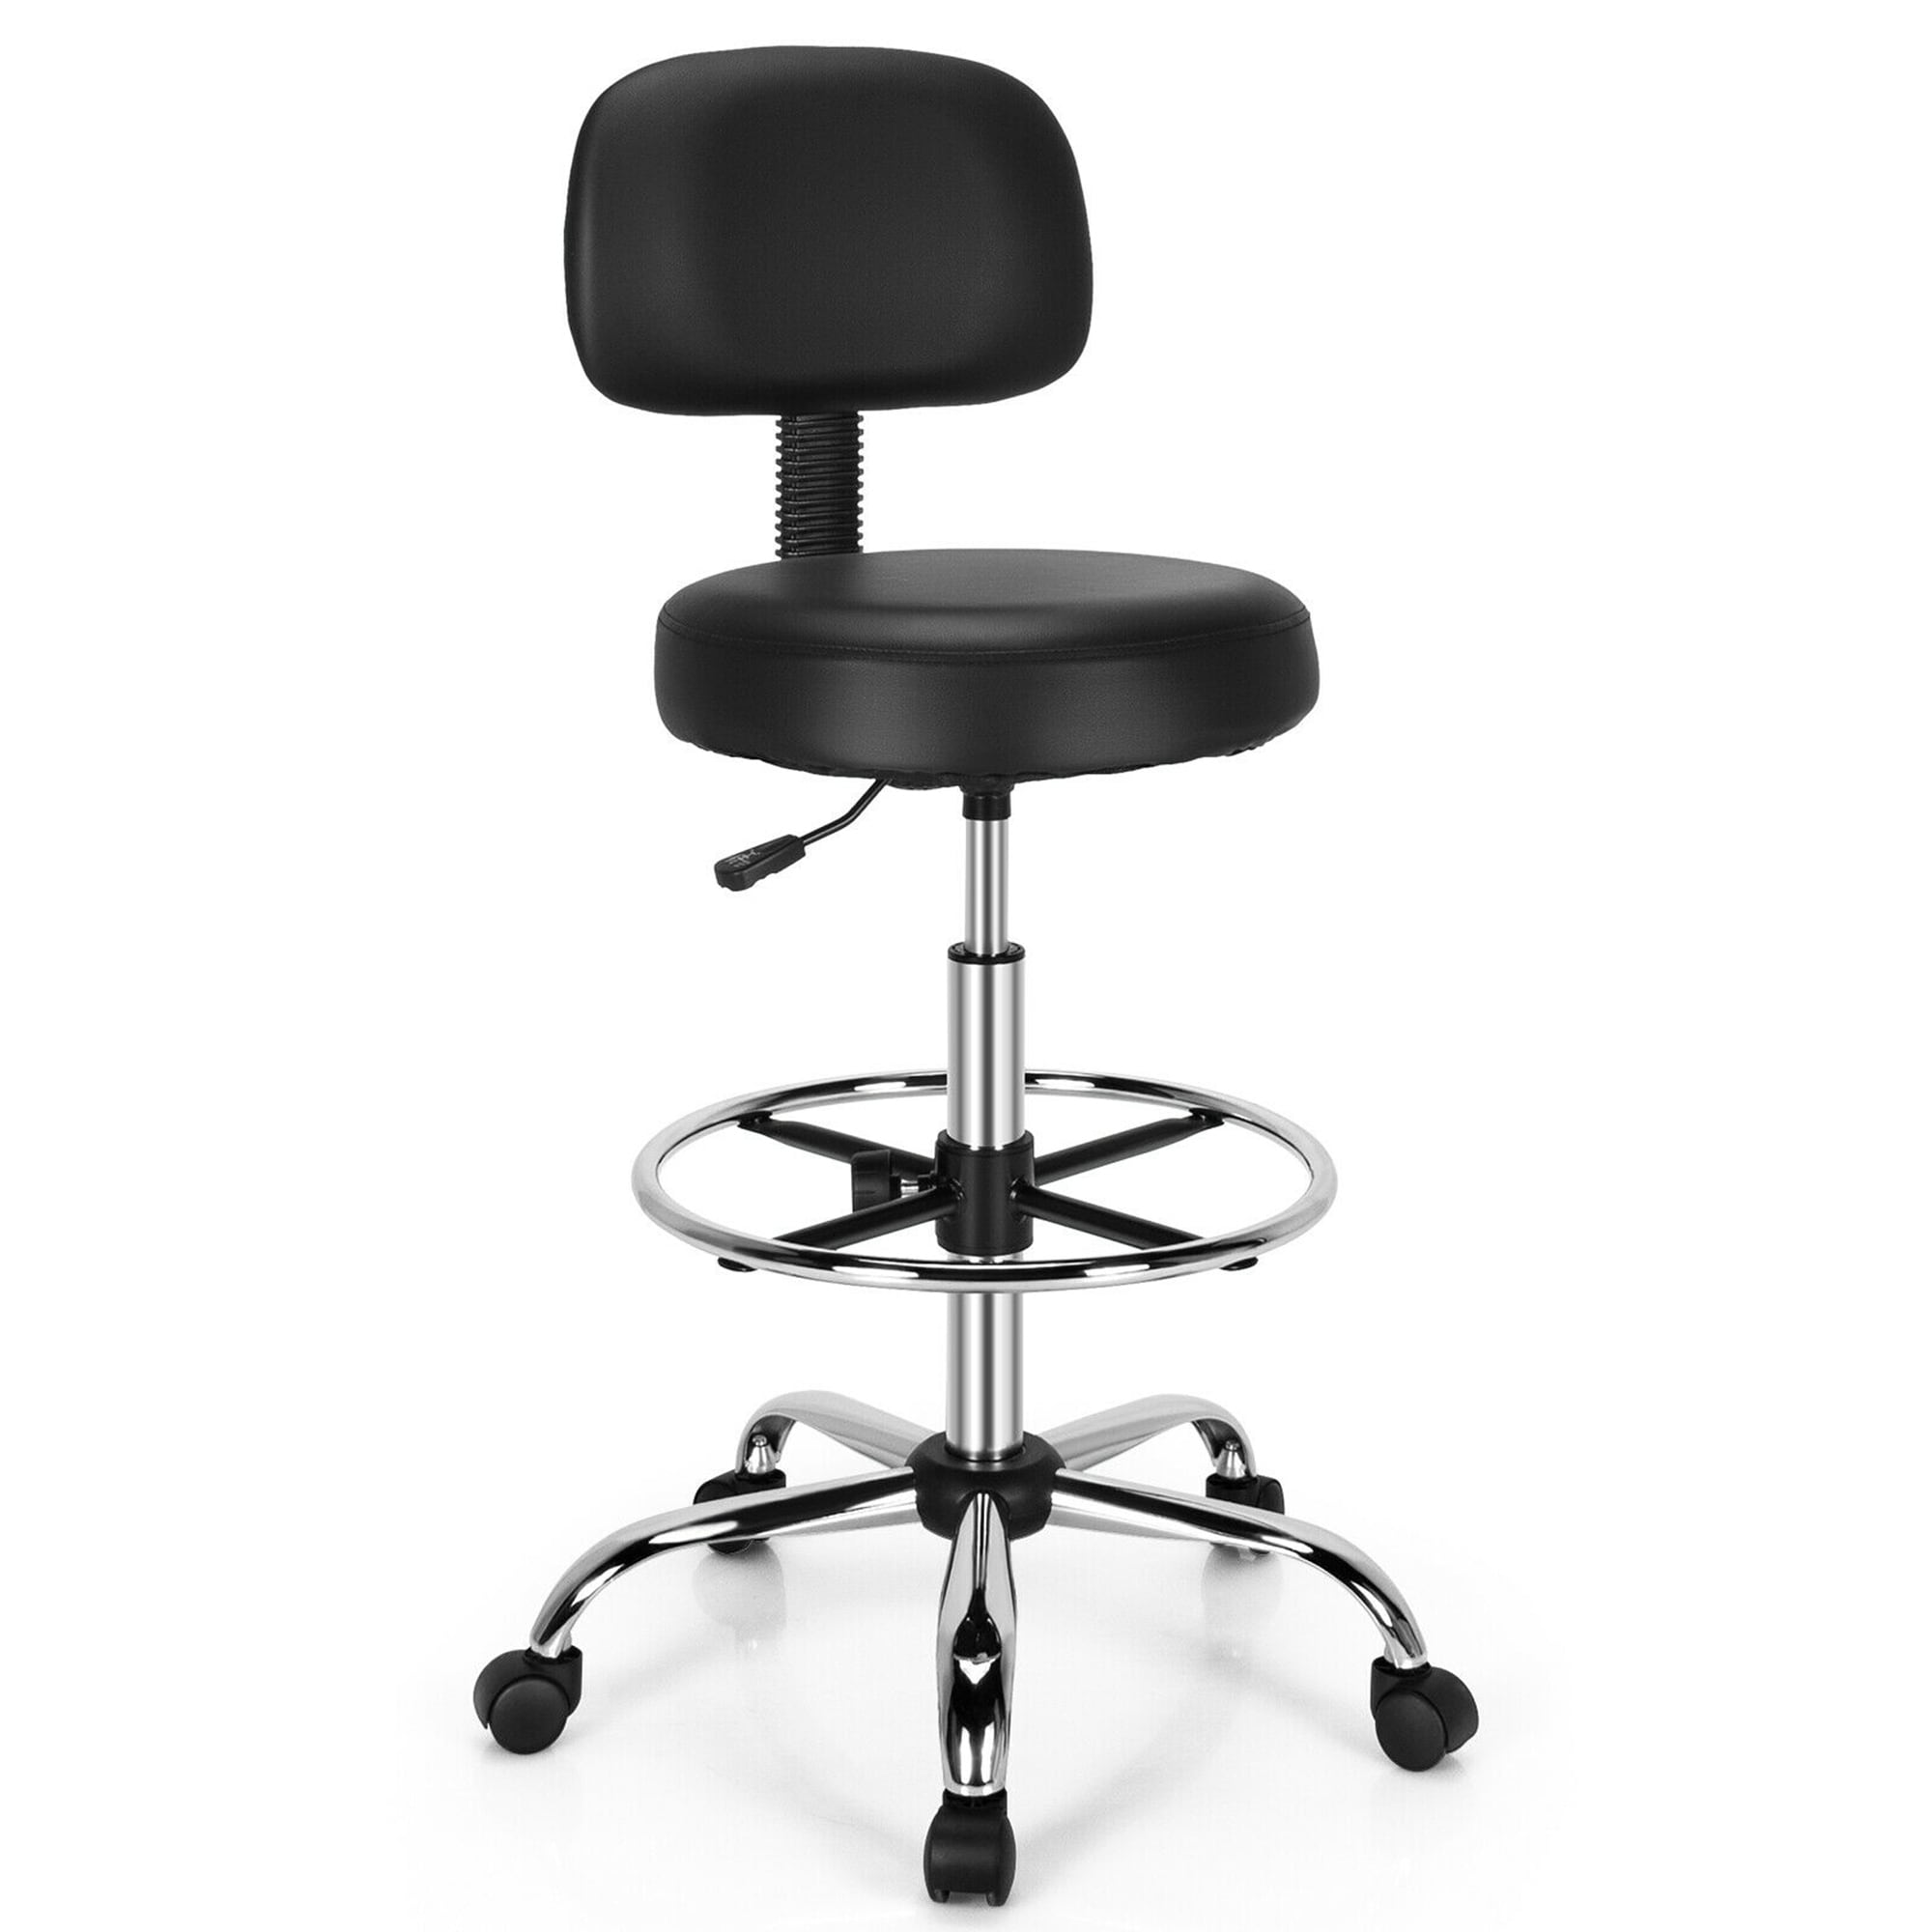 Giantex Ergonomic Drafting Chairs, Adjustable Swivel High Back